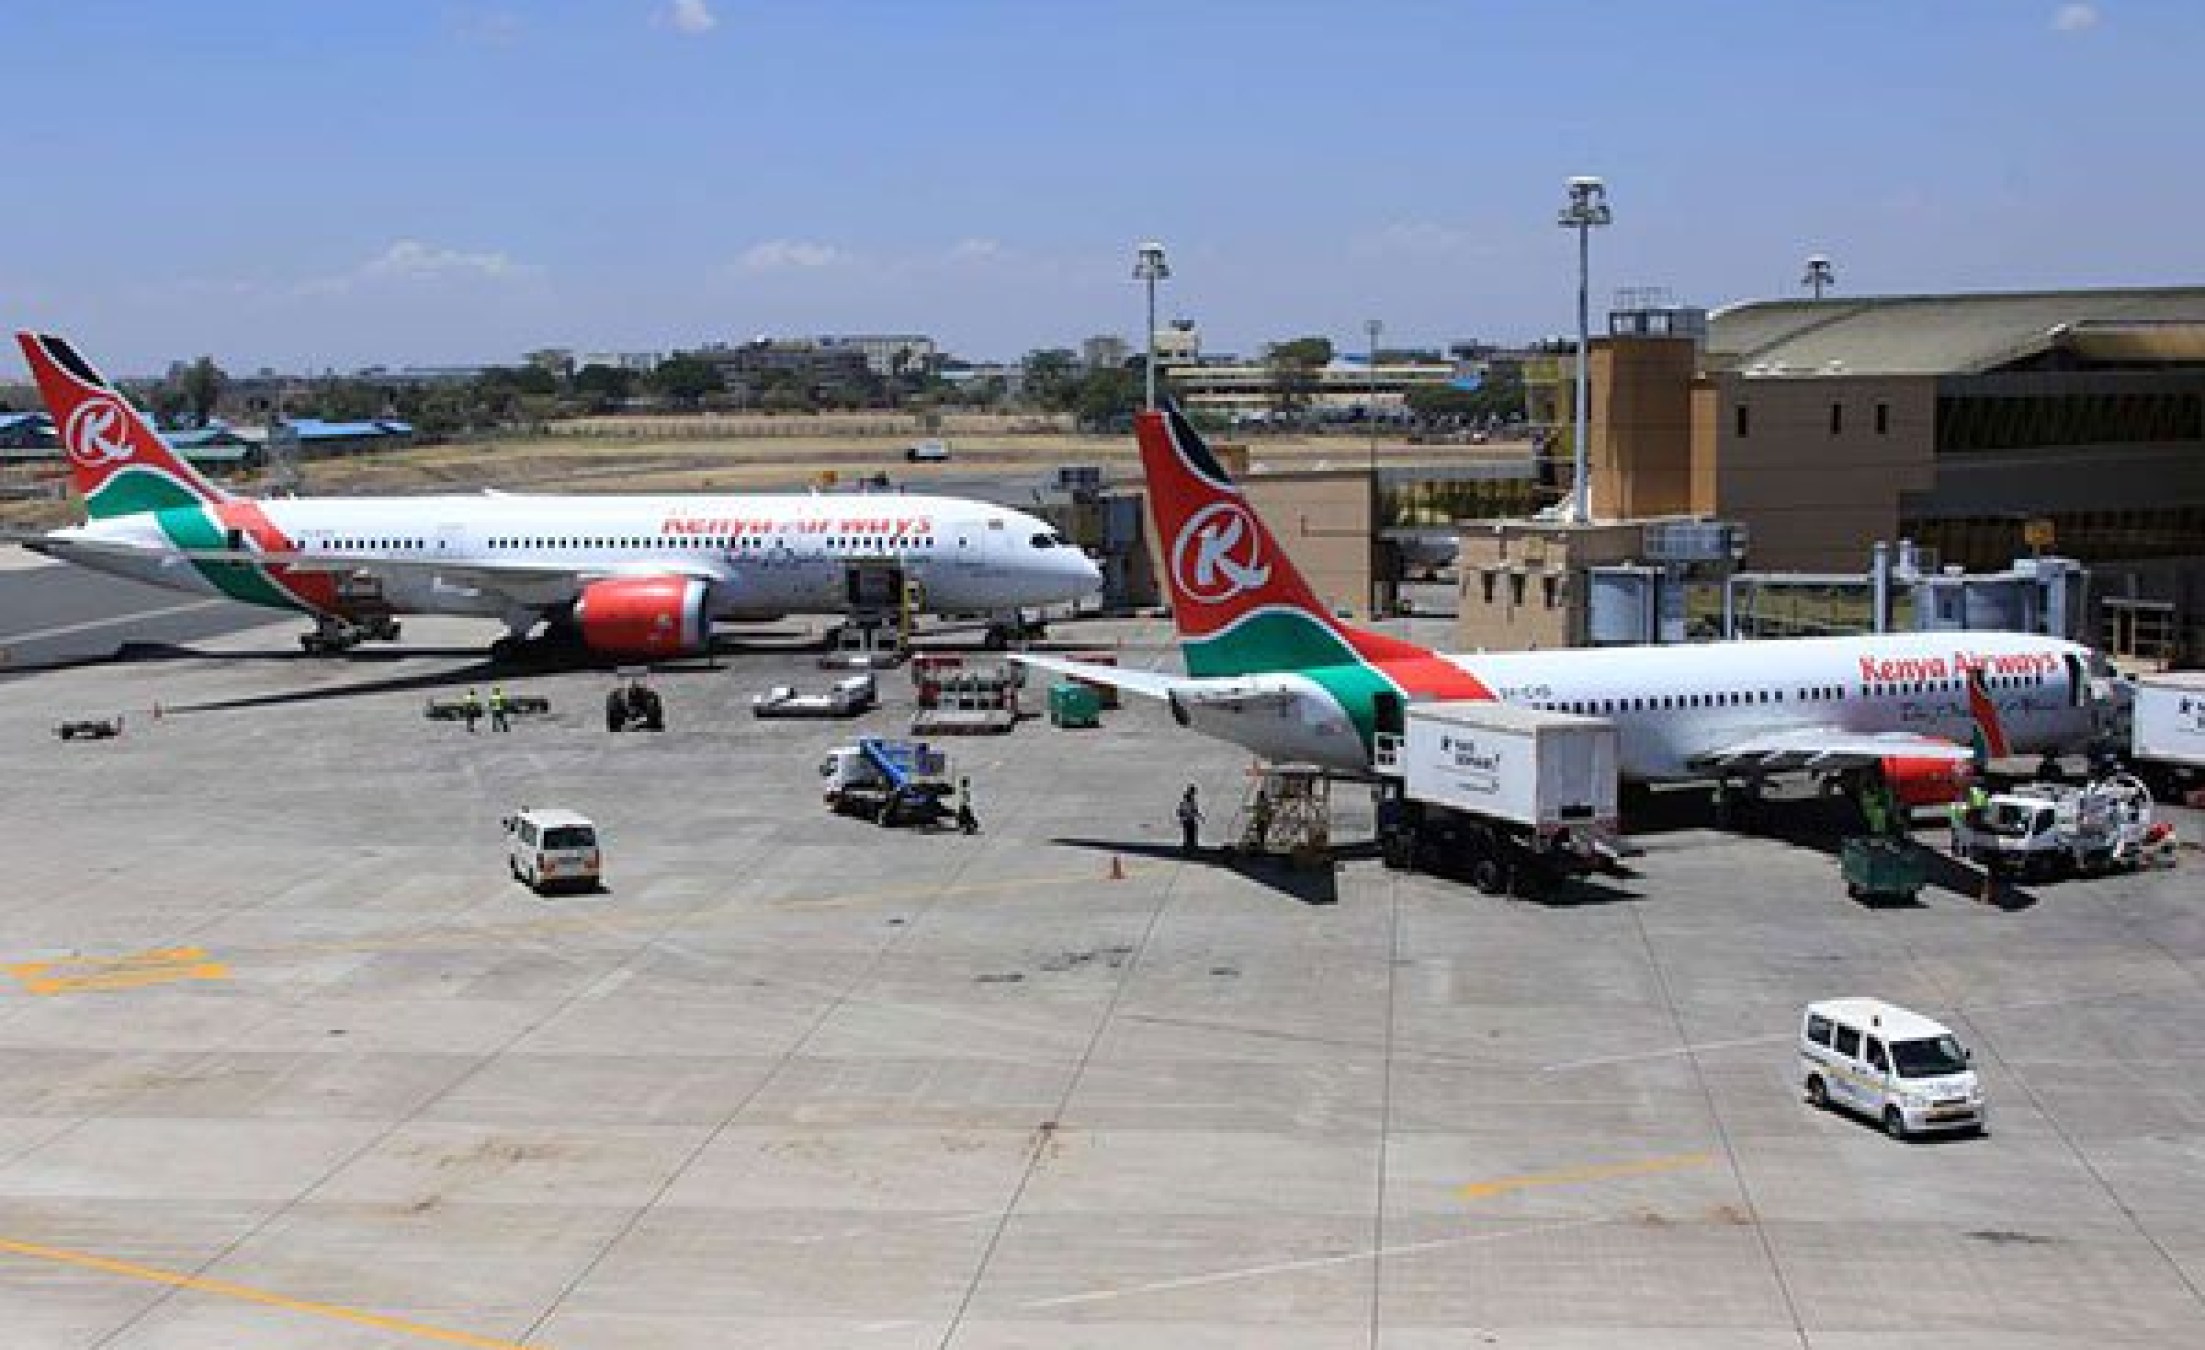 Tanzania: 19 Days Gone, Still No Kenya Airways Flights to Tanzania